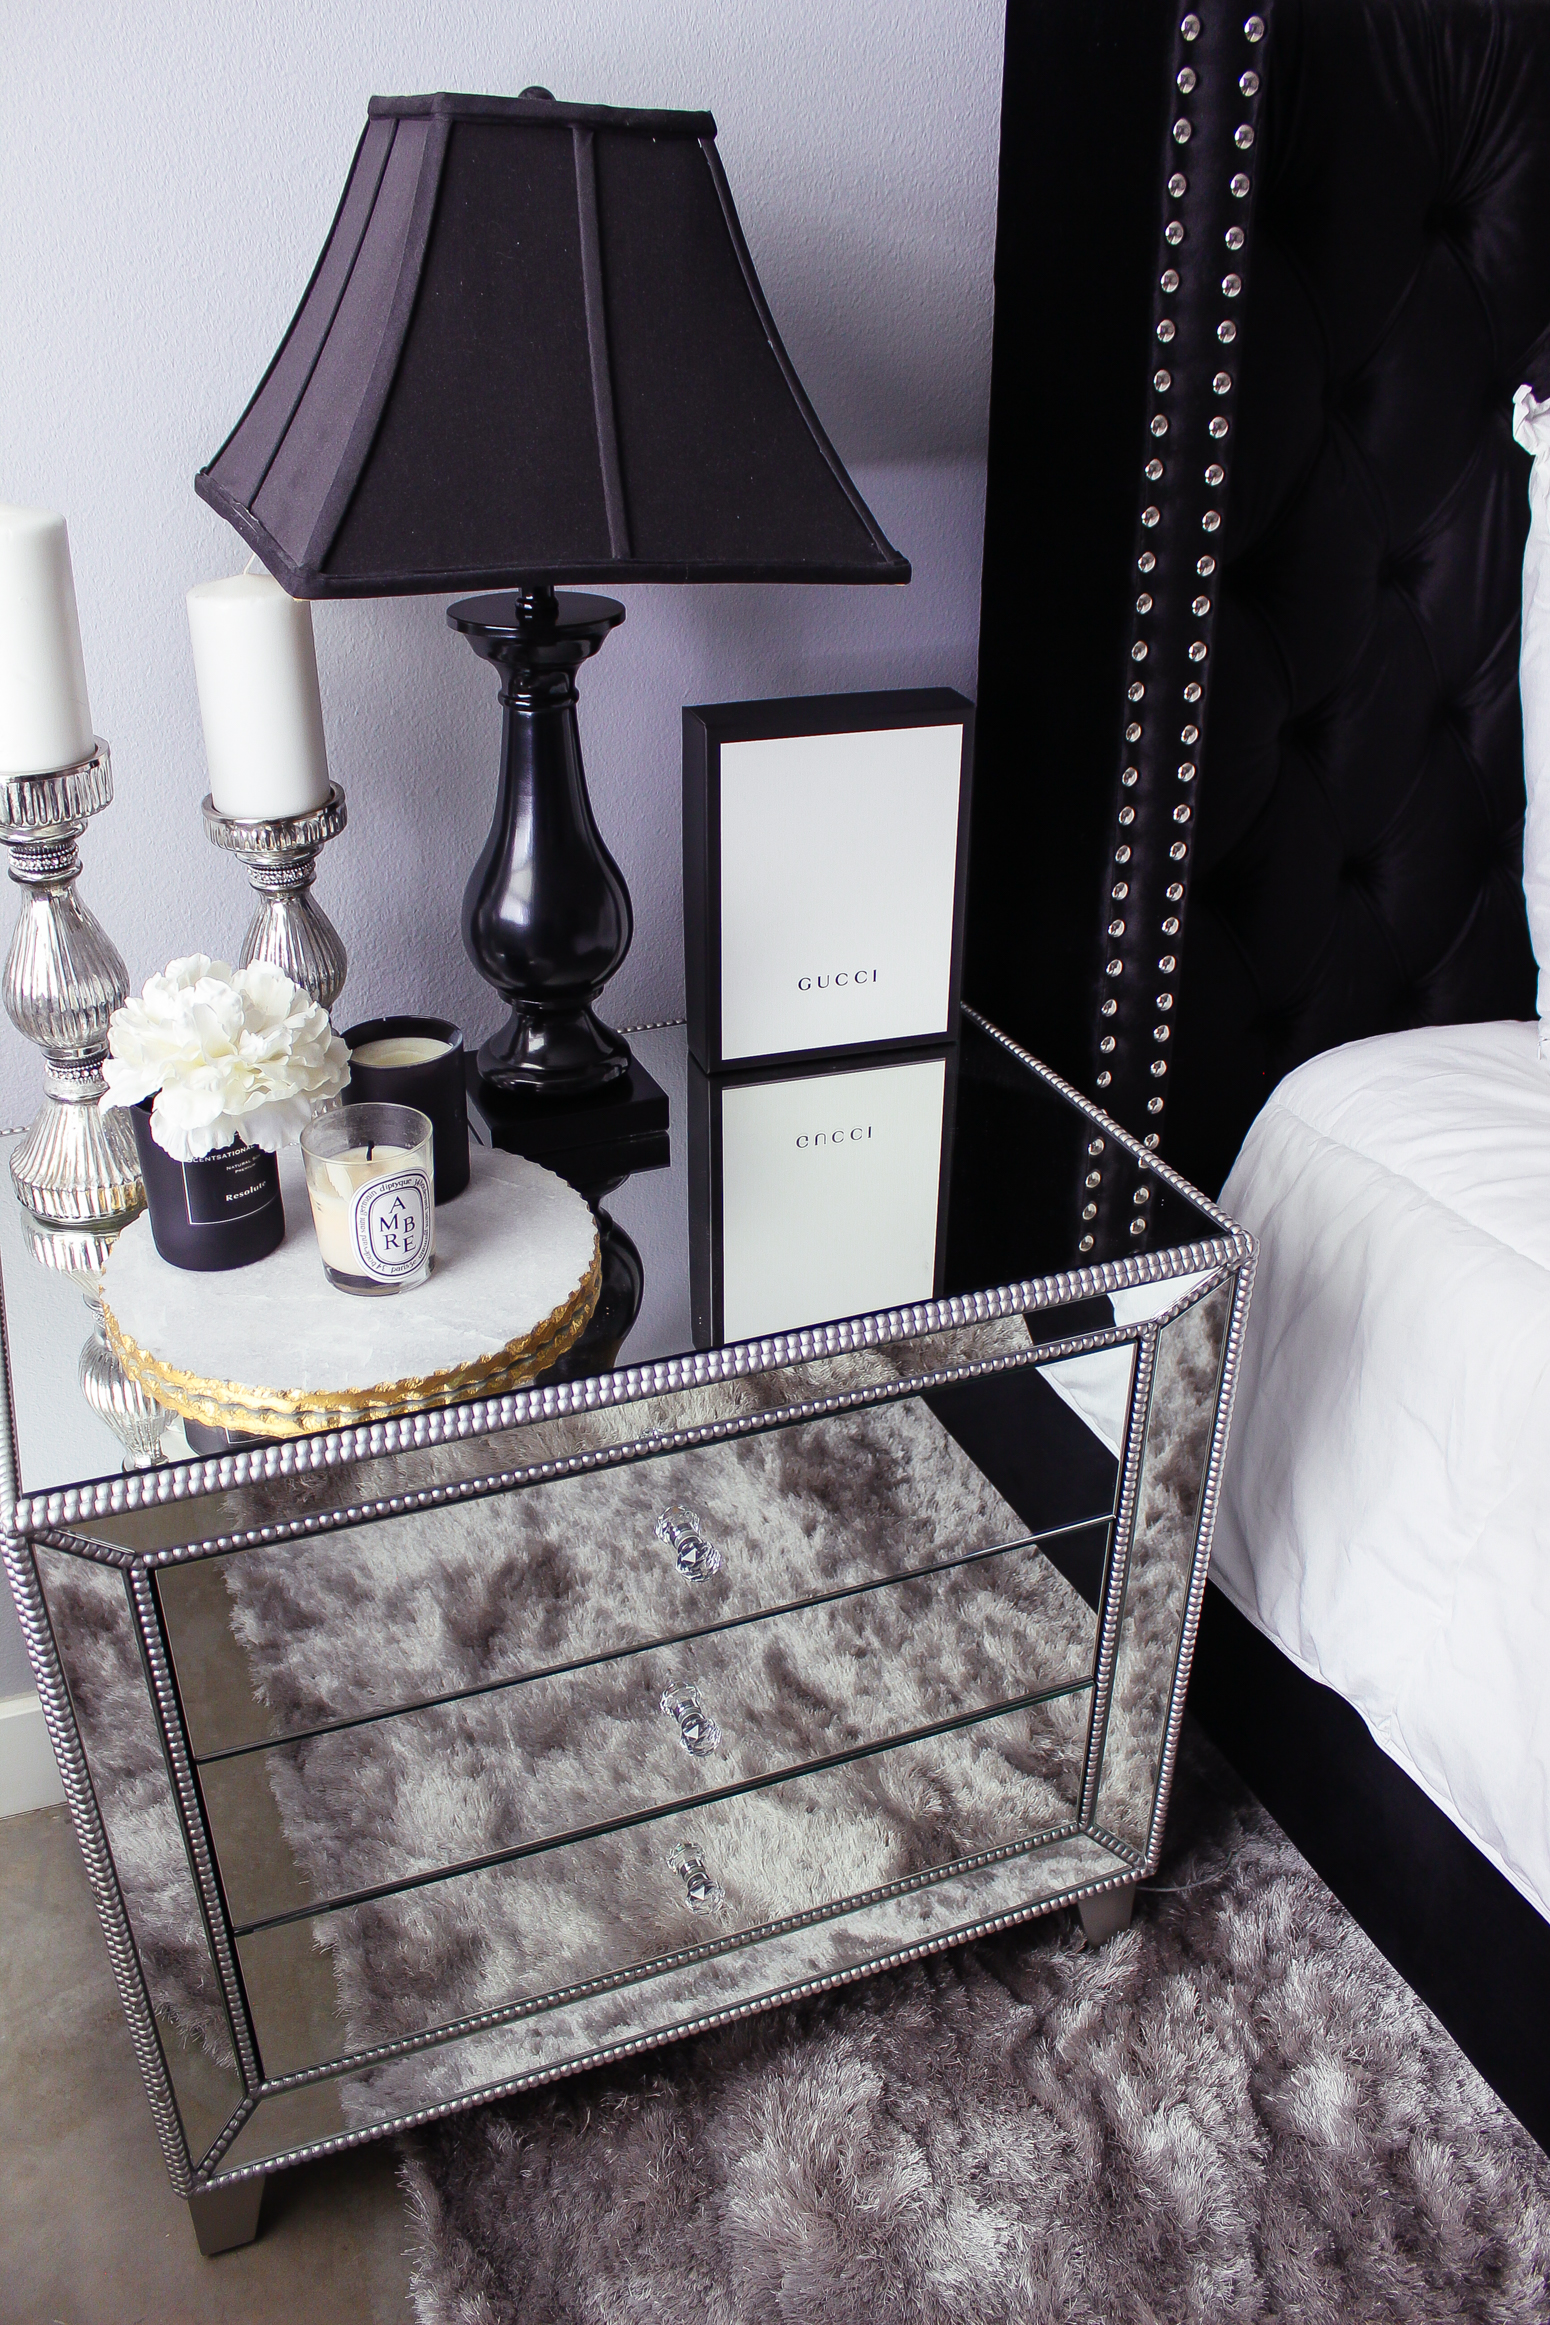 Black & White Bedroom Decor | Chic, Glam Bedroom Decor | Blondie in the City | Hayley Larue Bedroom Decor | Chanel Decor